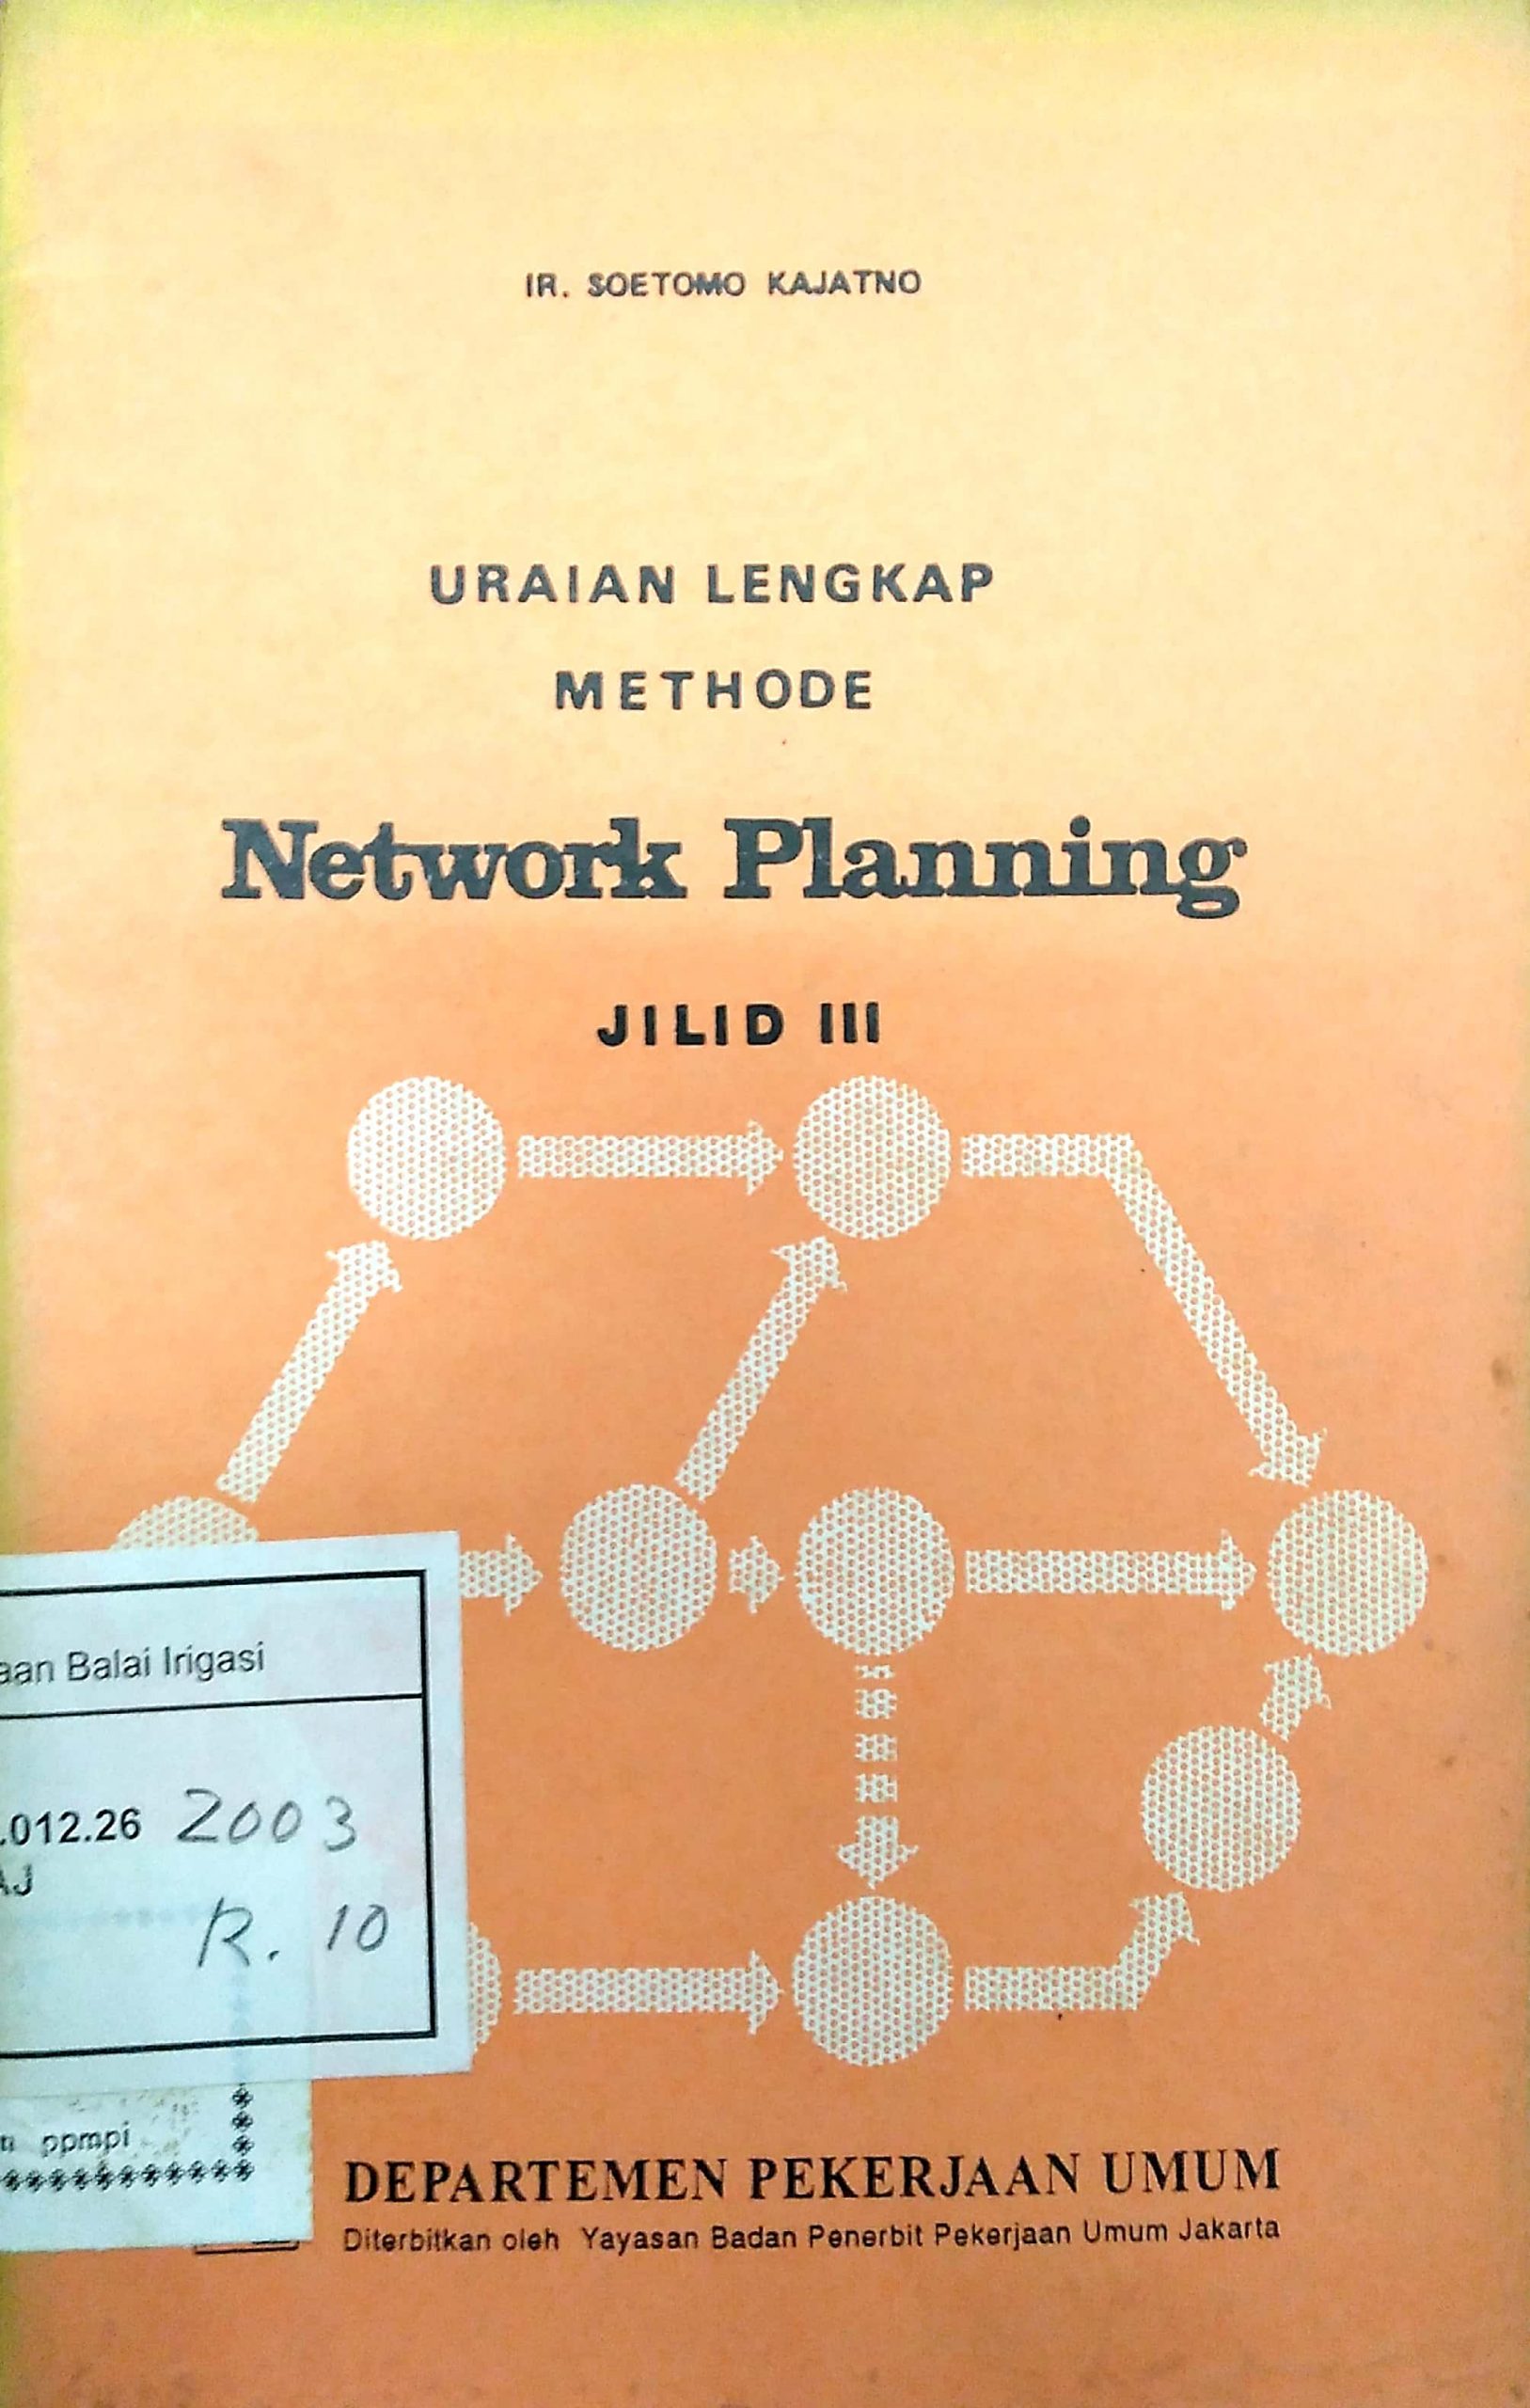 Uraian Lengkap Methode Network Planning Jilid III